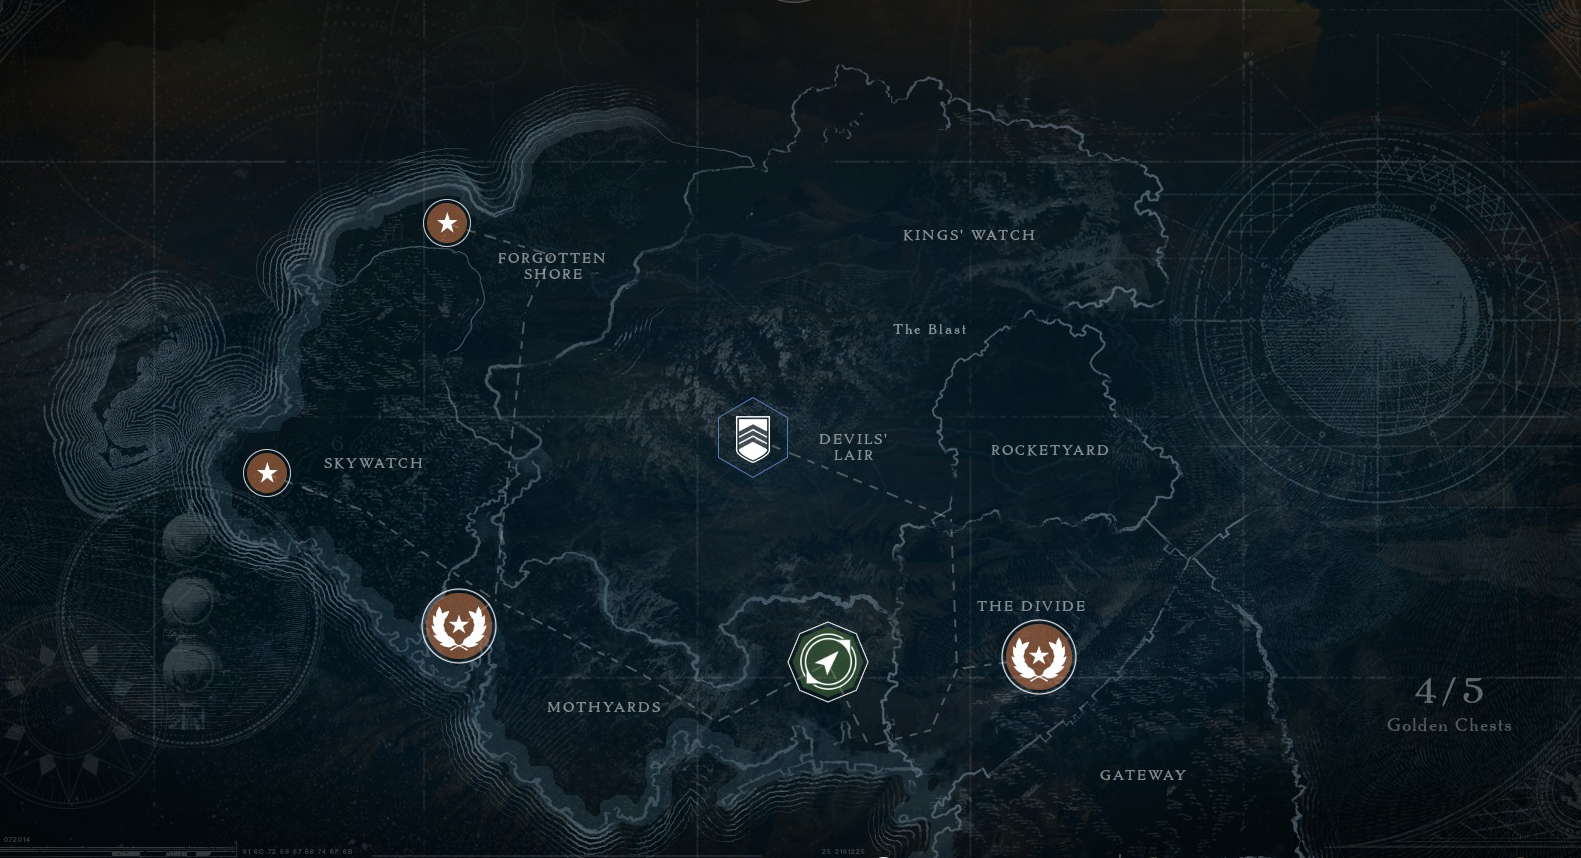 Destiny 2: Every Cosmodrome Region Chest Location